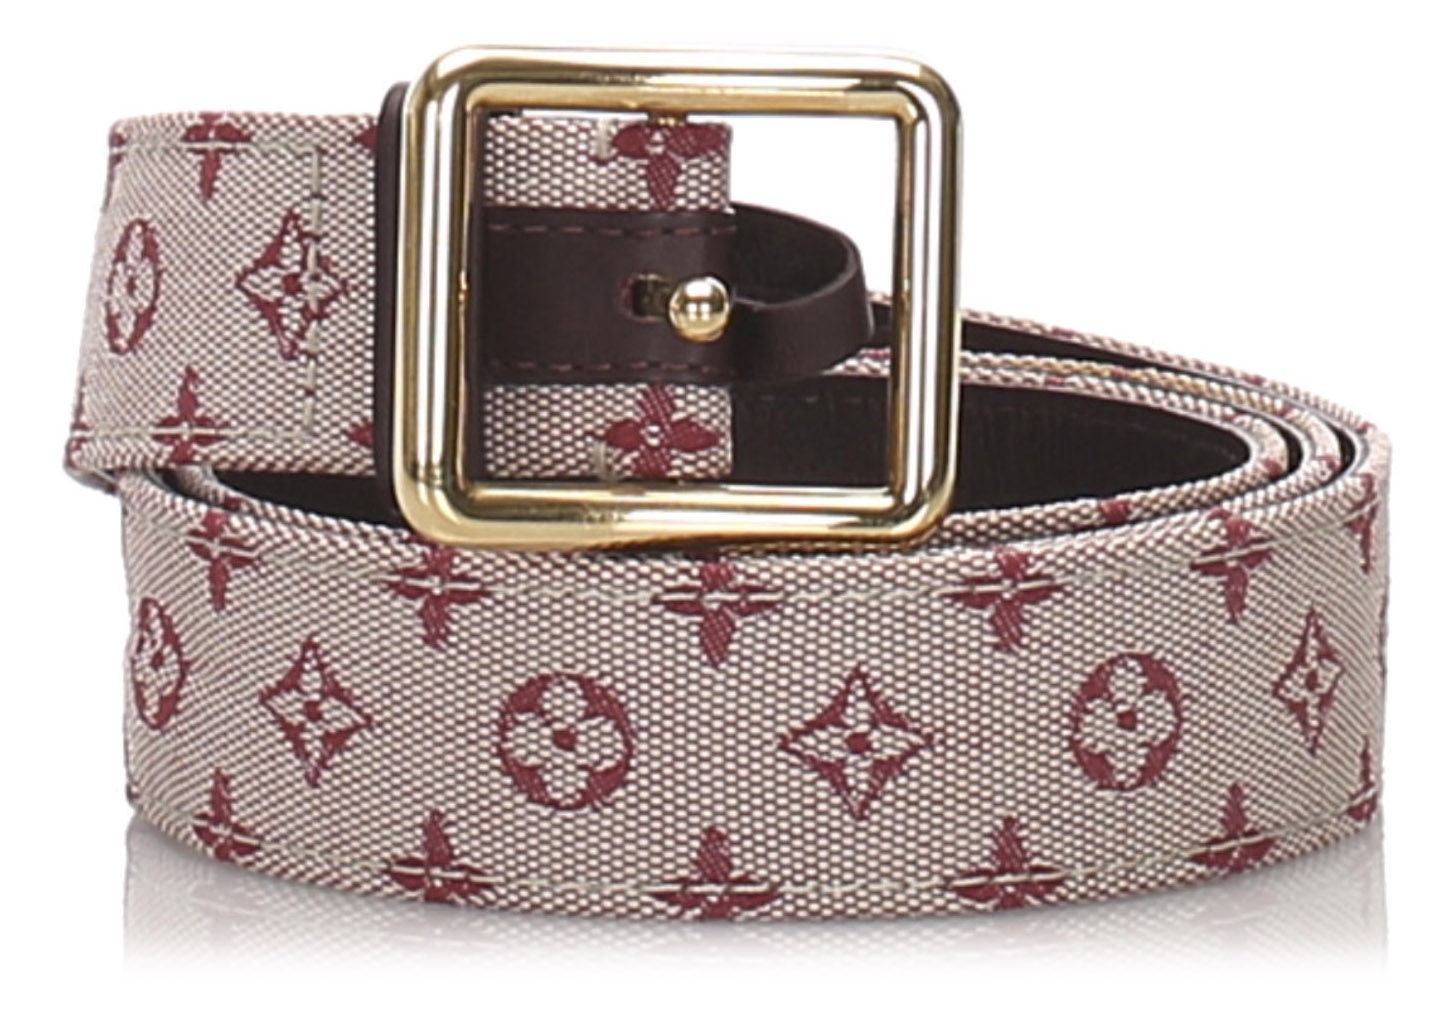 LV belt with monogram - The High Luxury